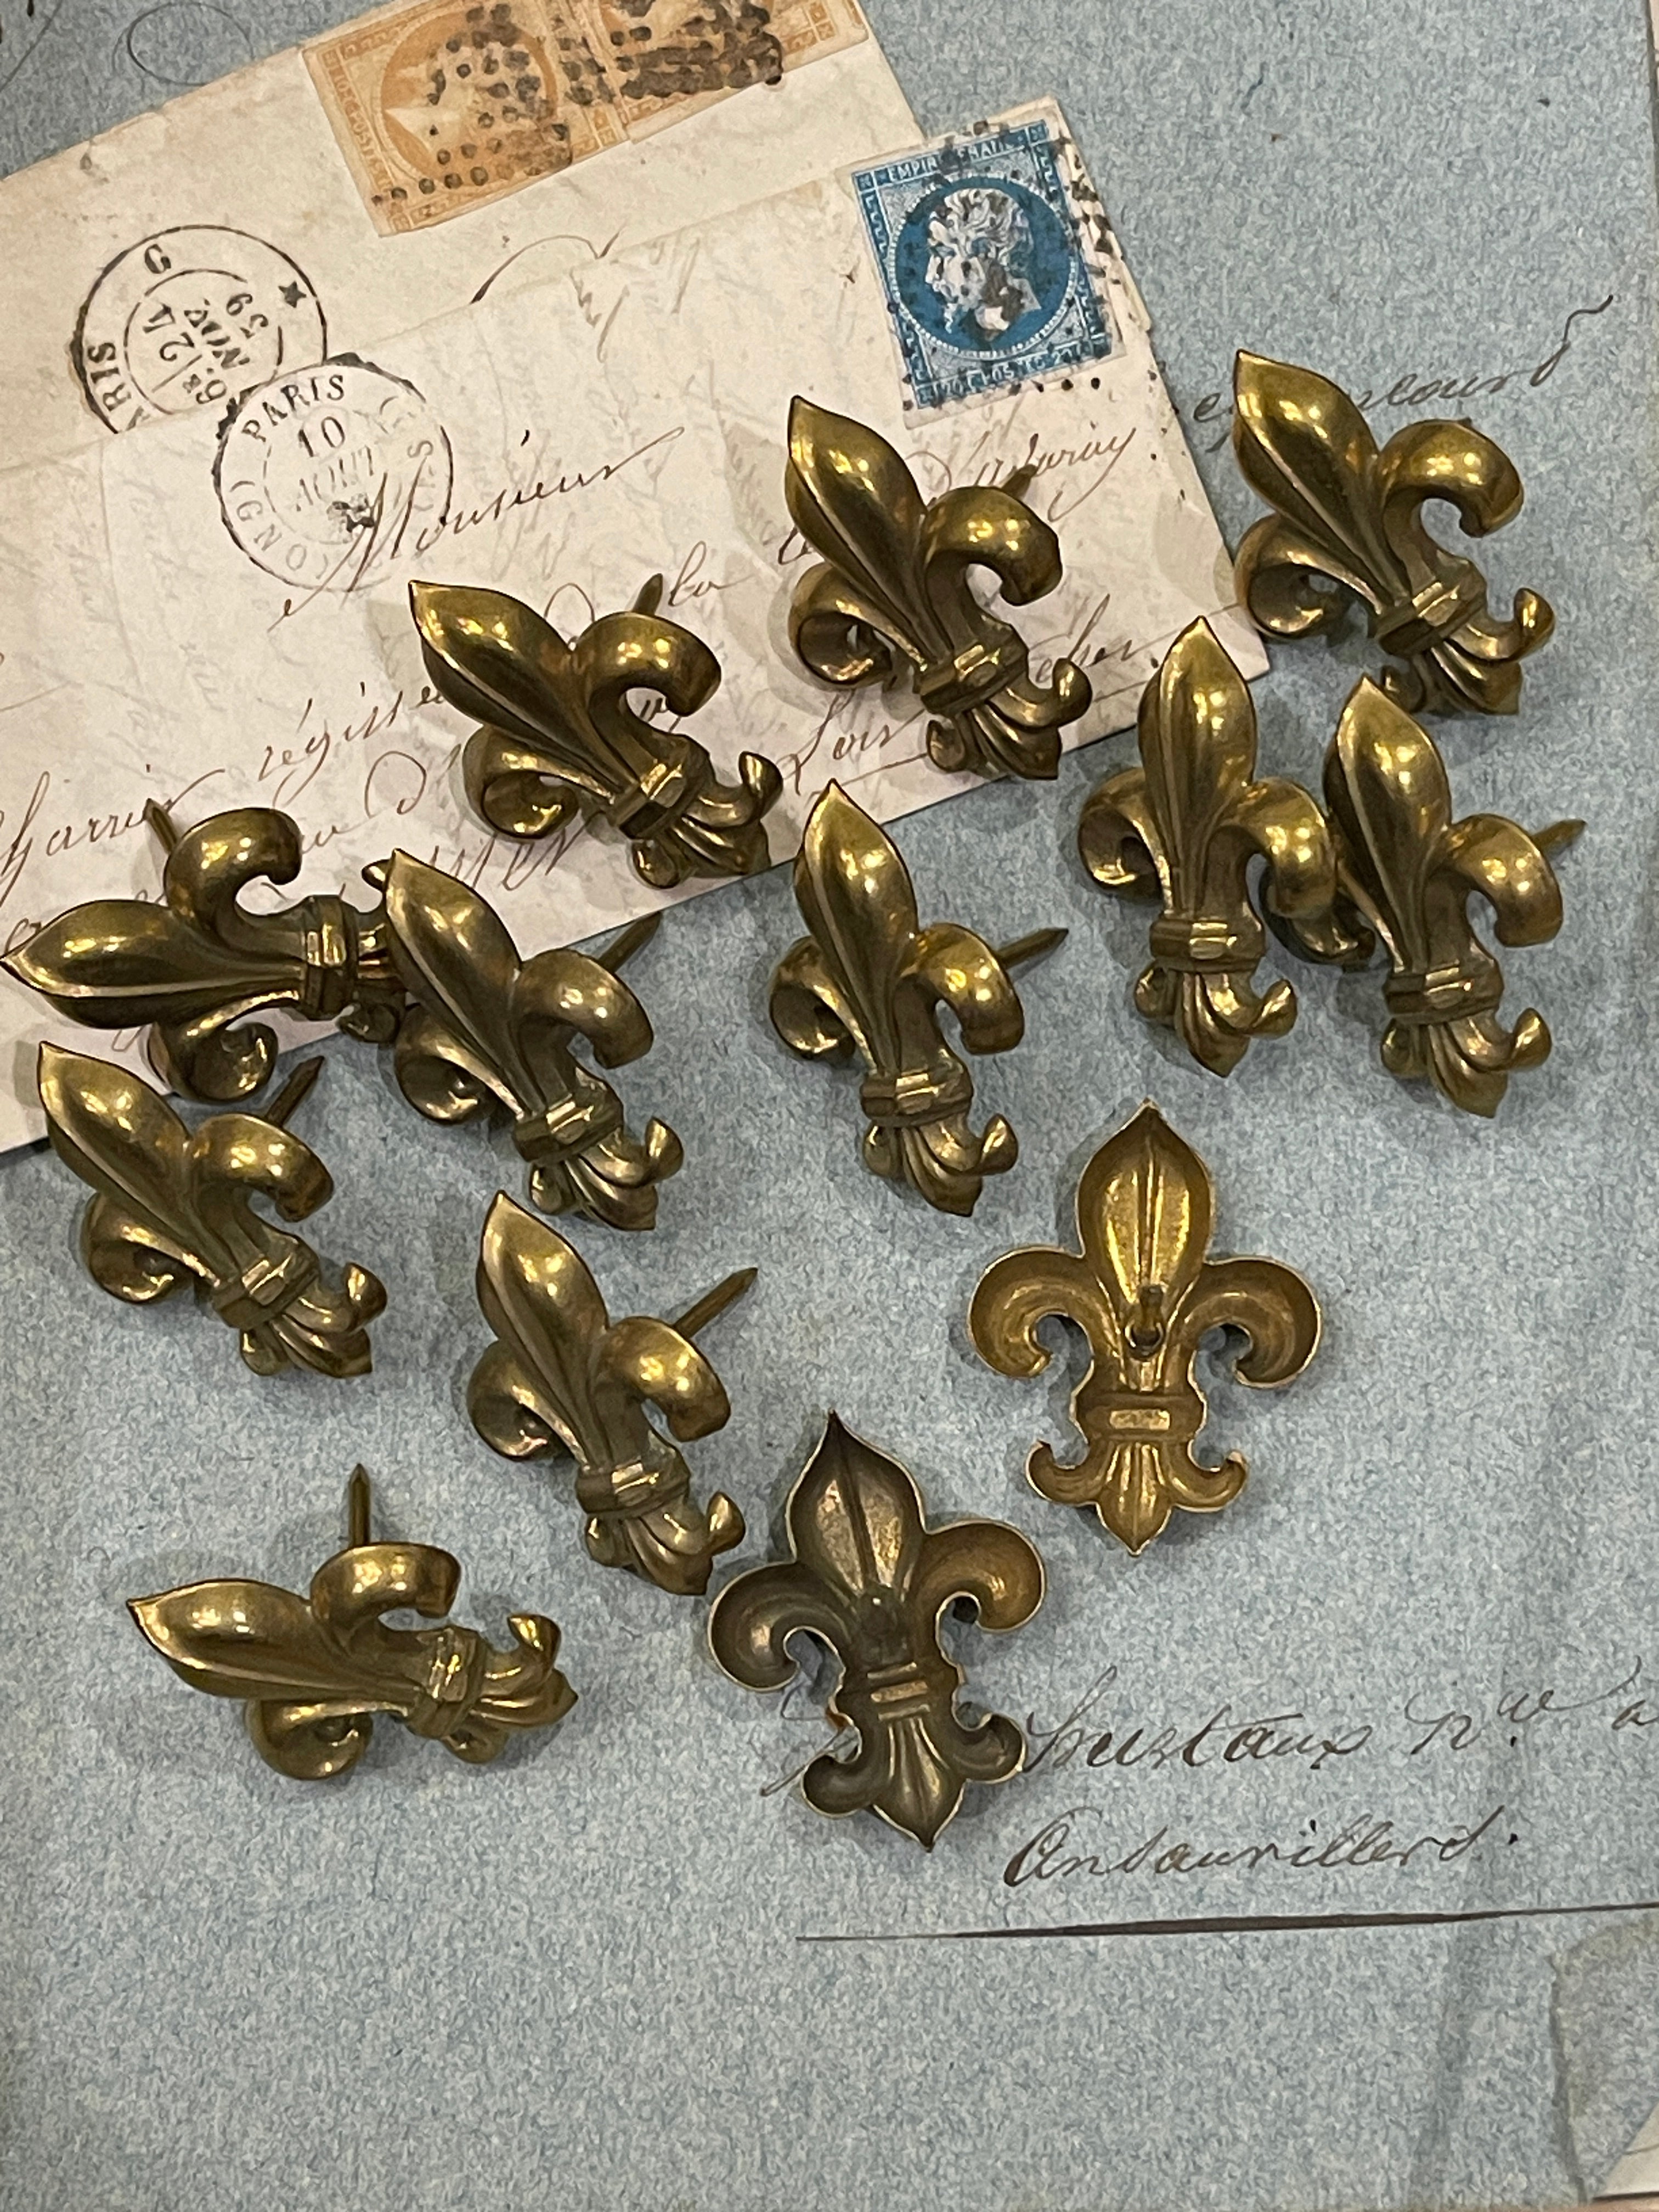 VERY RARE 1800's Antique French Fleur De Lis Pin Pieces